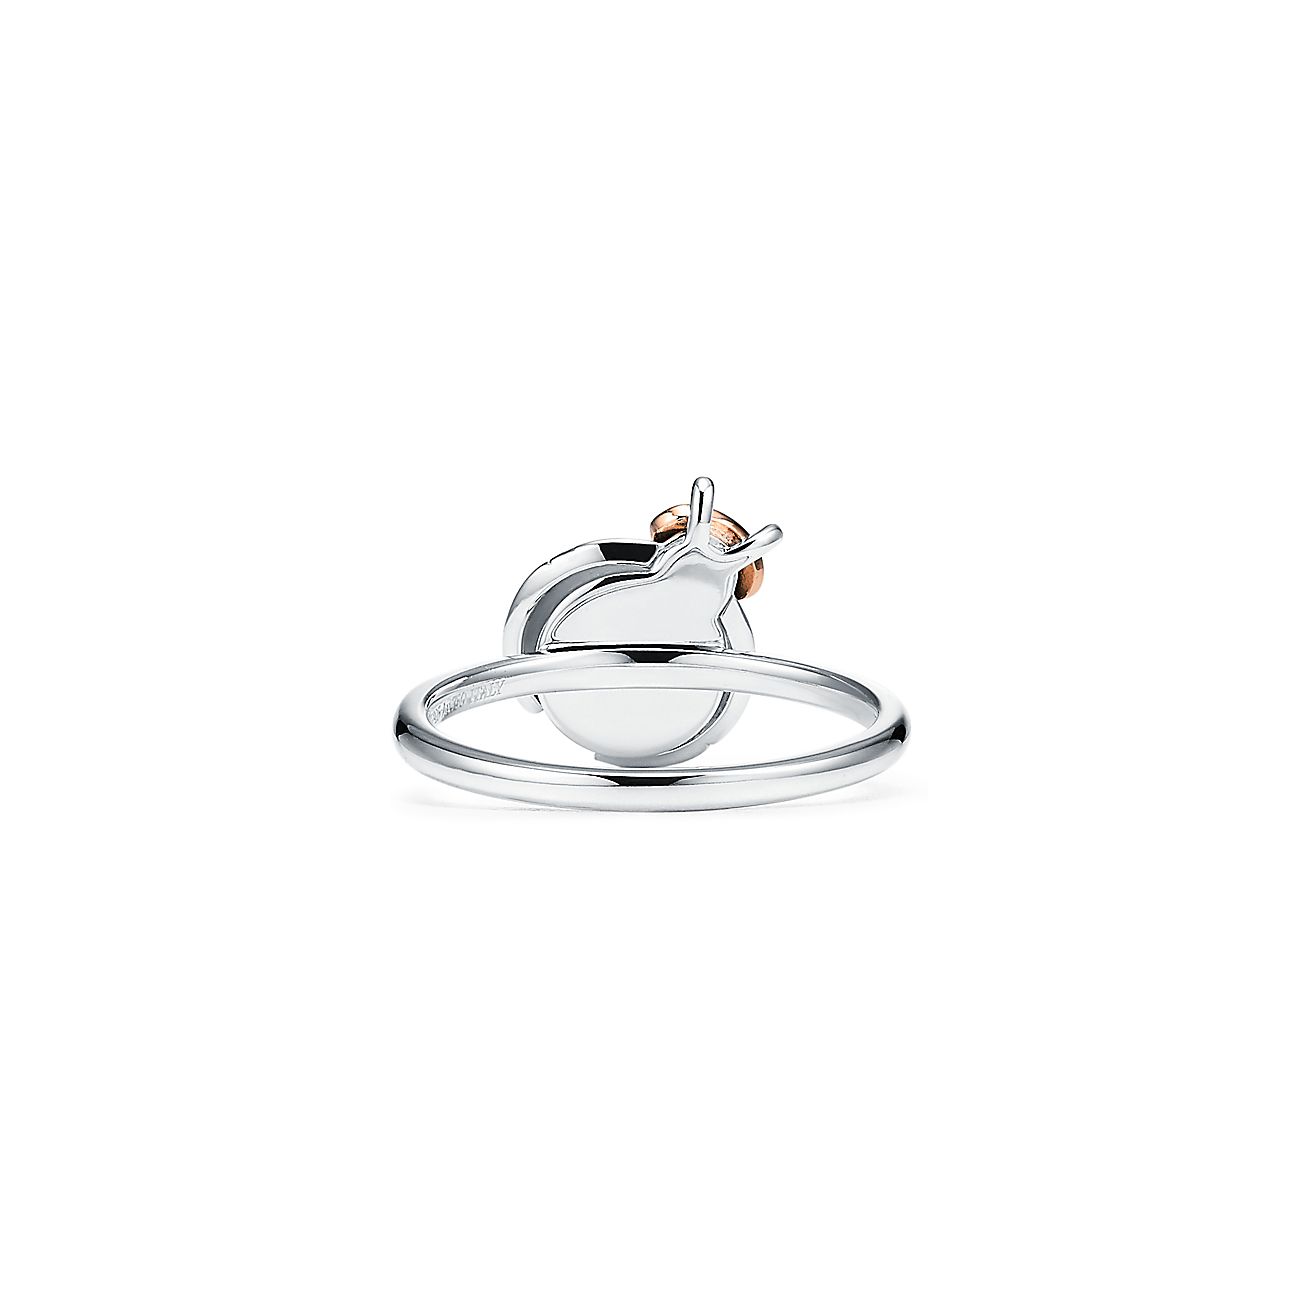 werkplaats Bruin En team Return to Tiffany® Love Bugs ladybug ring in sterling silver and 18k rose  gold. | Tiffany & Co.